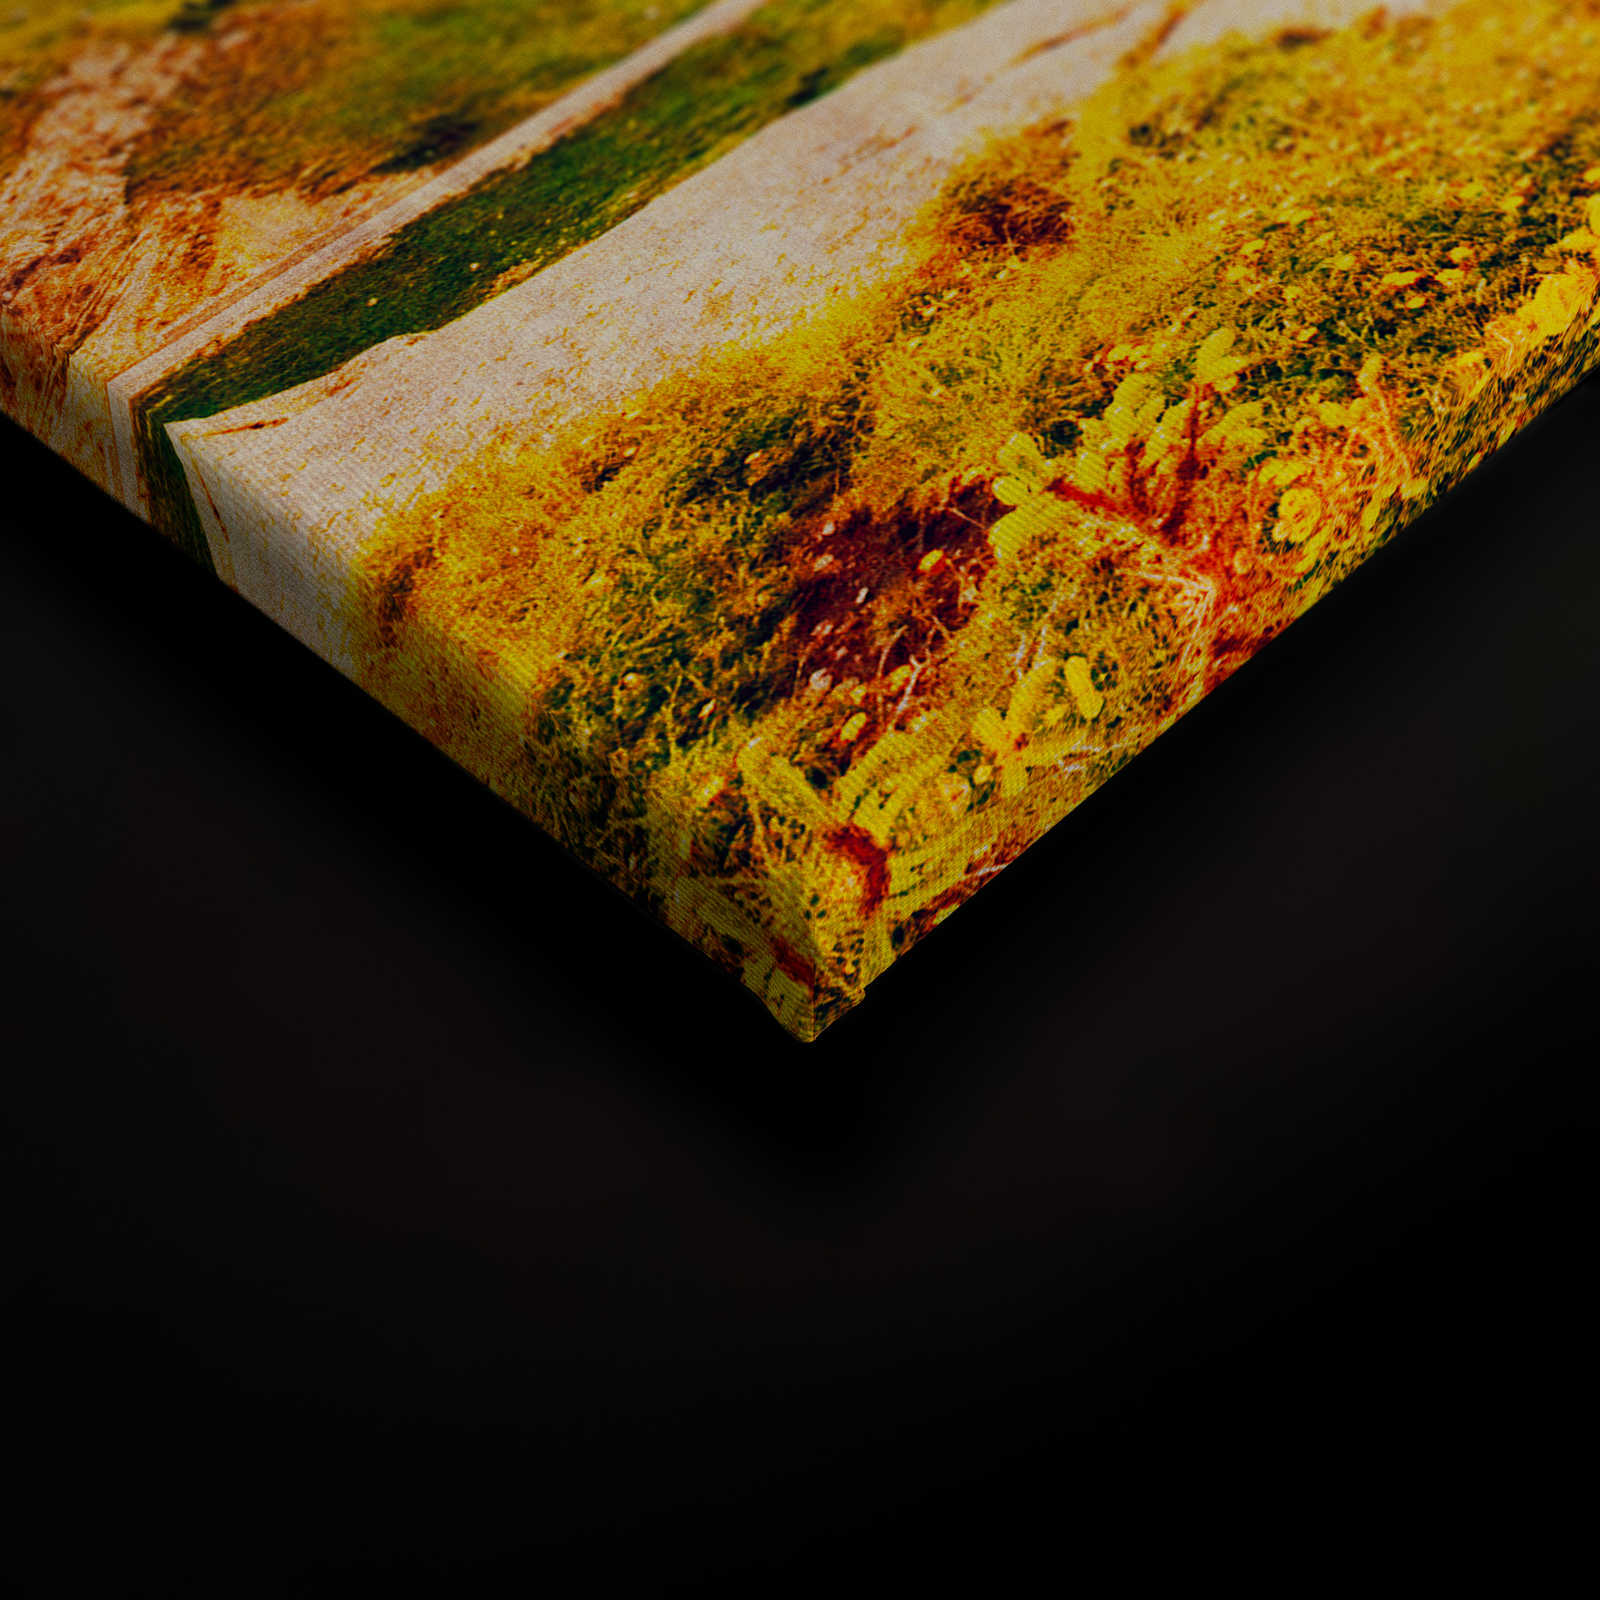             Dolomiti 1 - Canvas painting Dolomites Retro Photography - Blotting paper - 0.90 m x 0.60 m
        